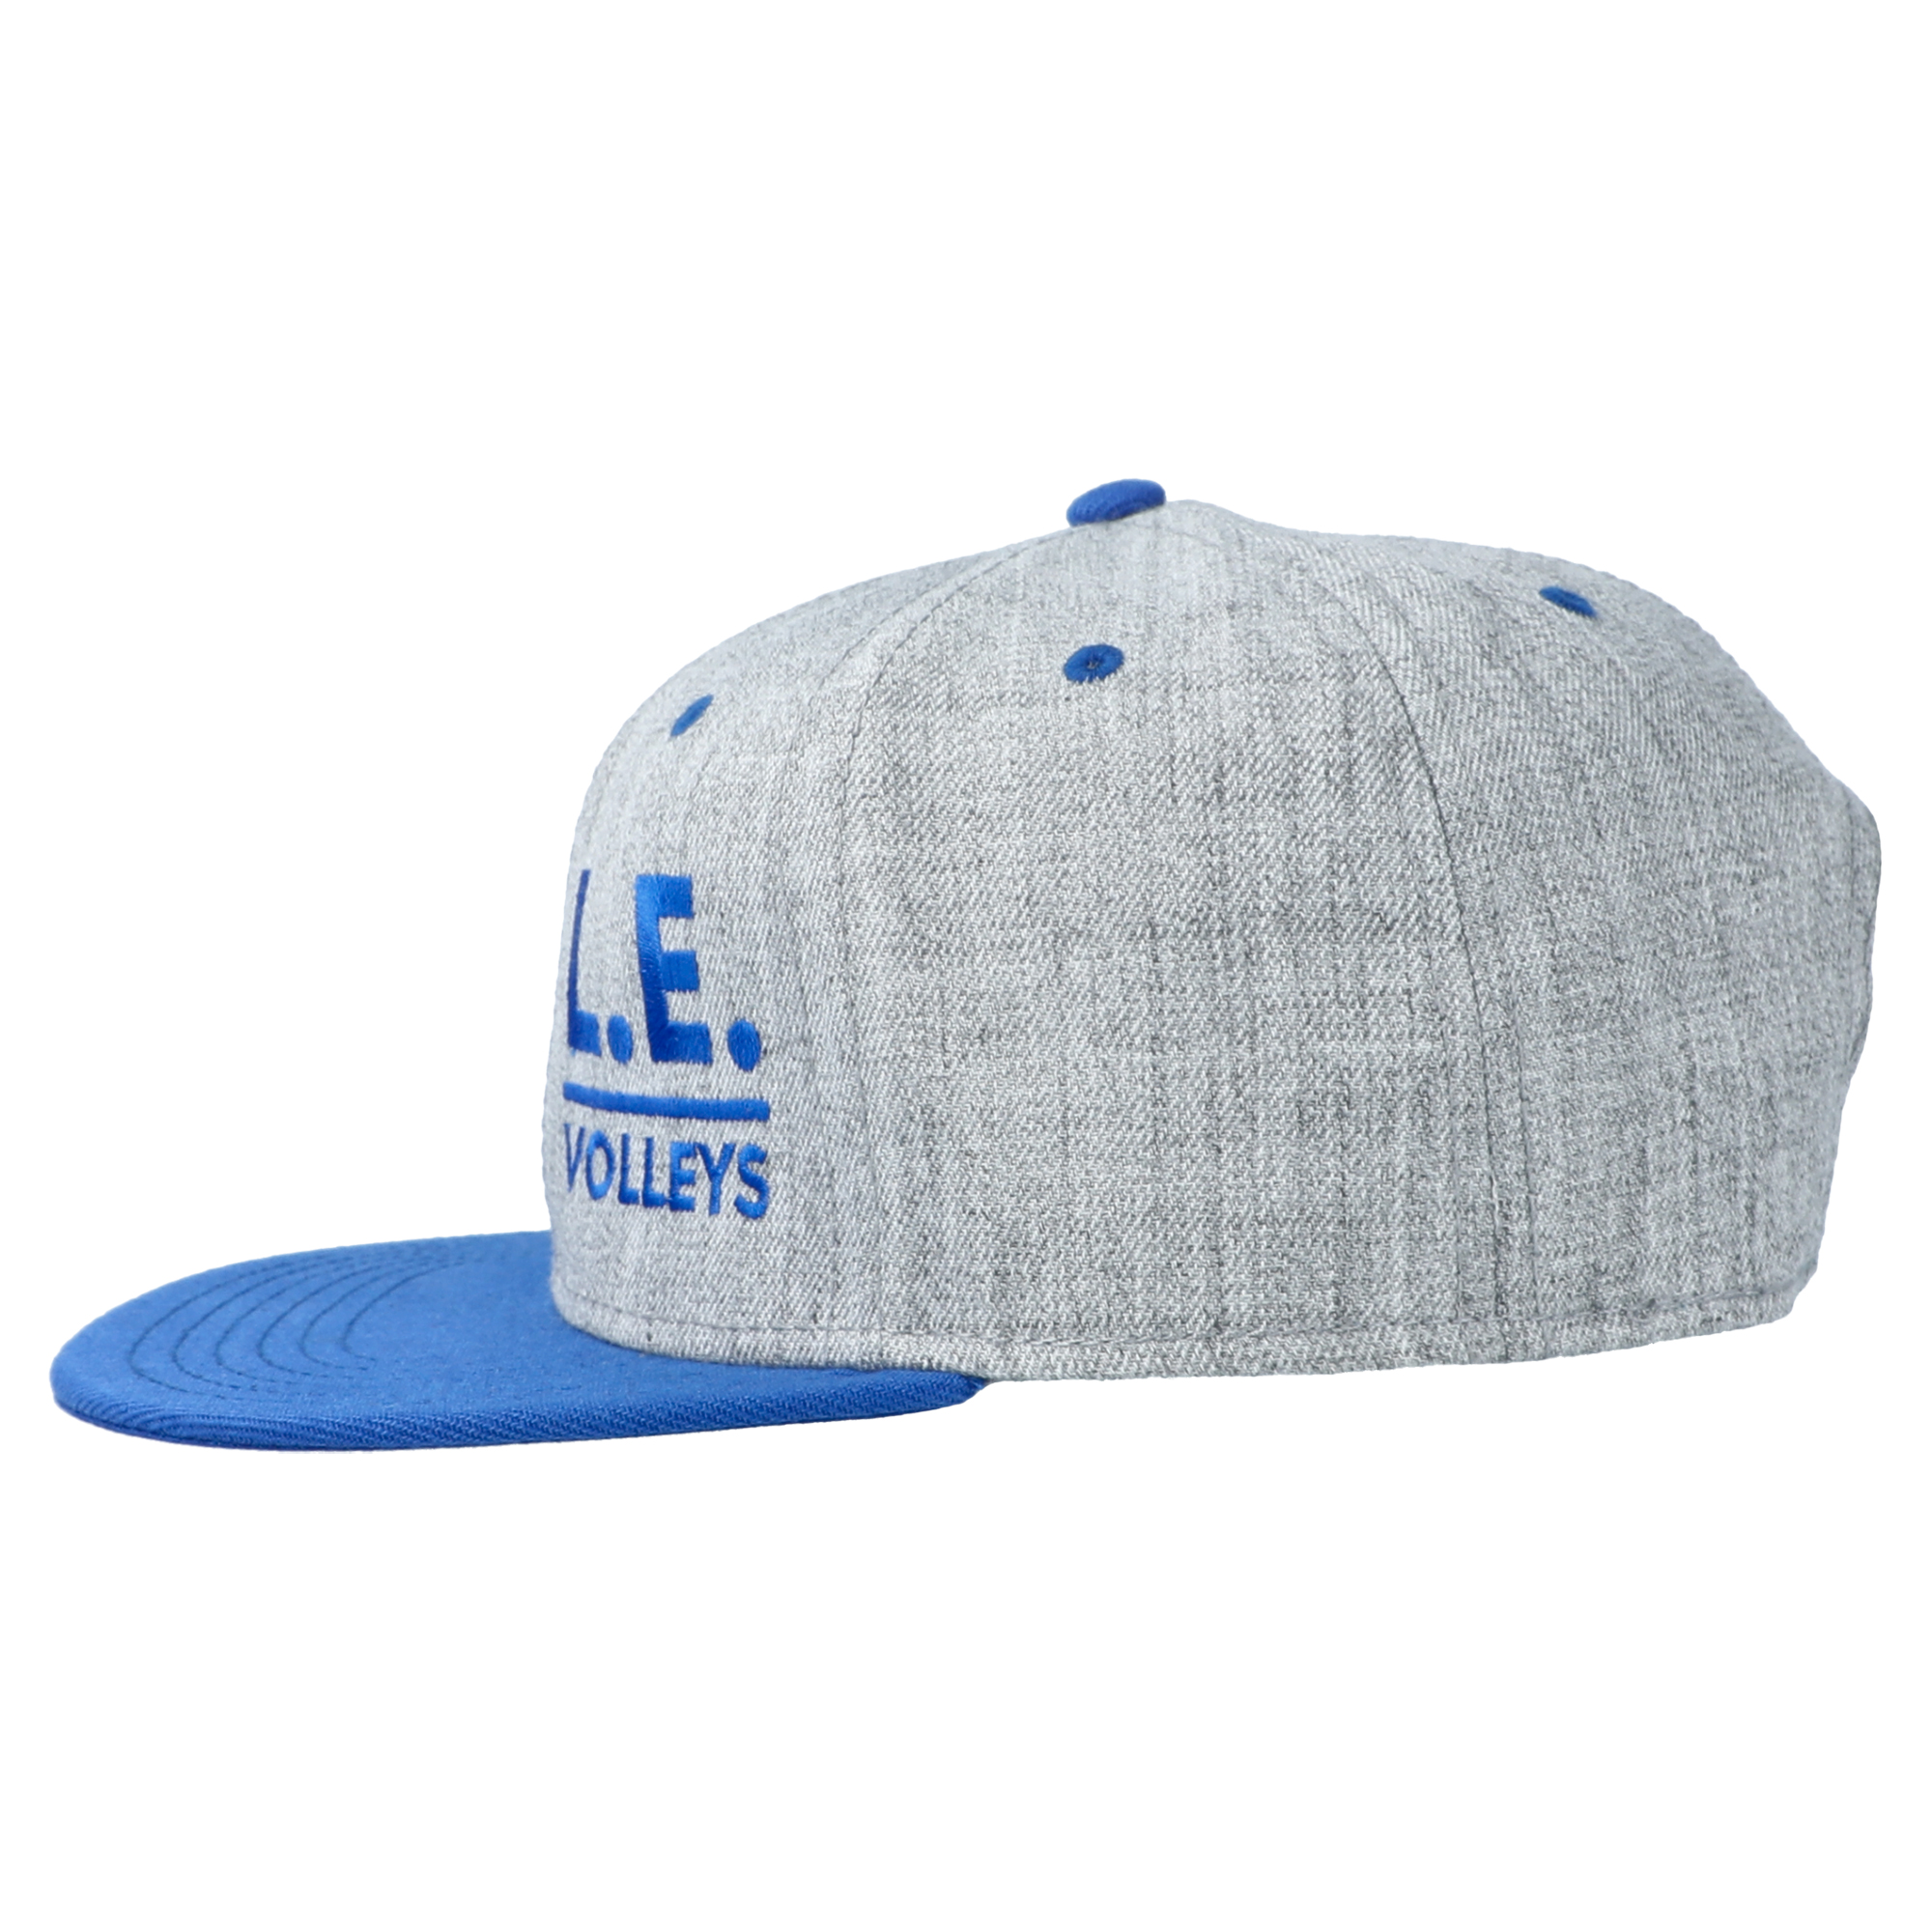 L.E. Volleys Fan-Cap